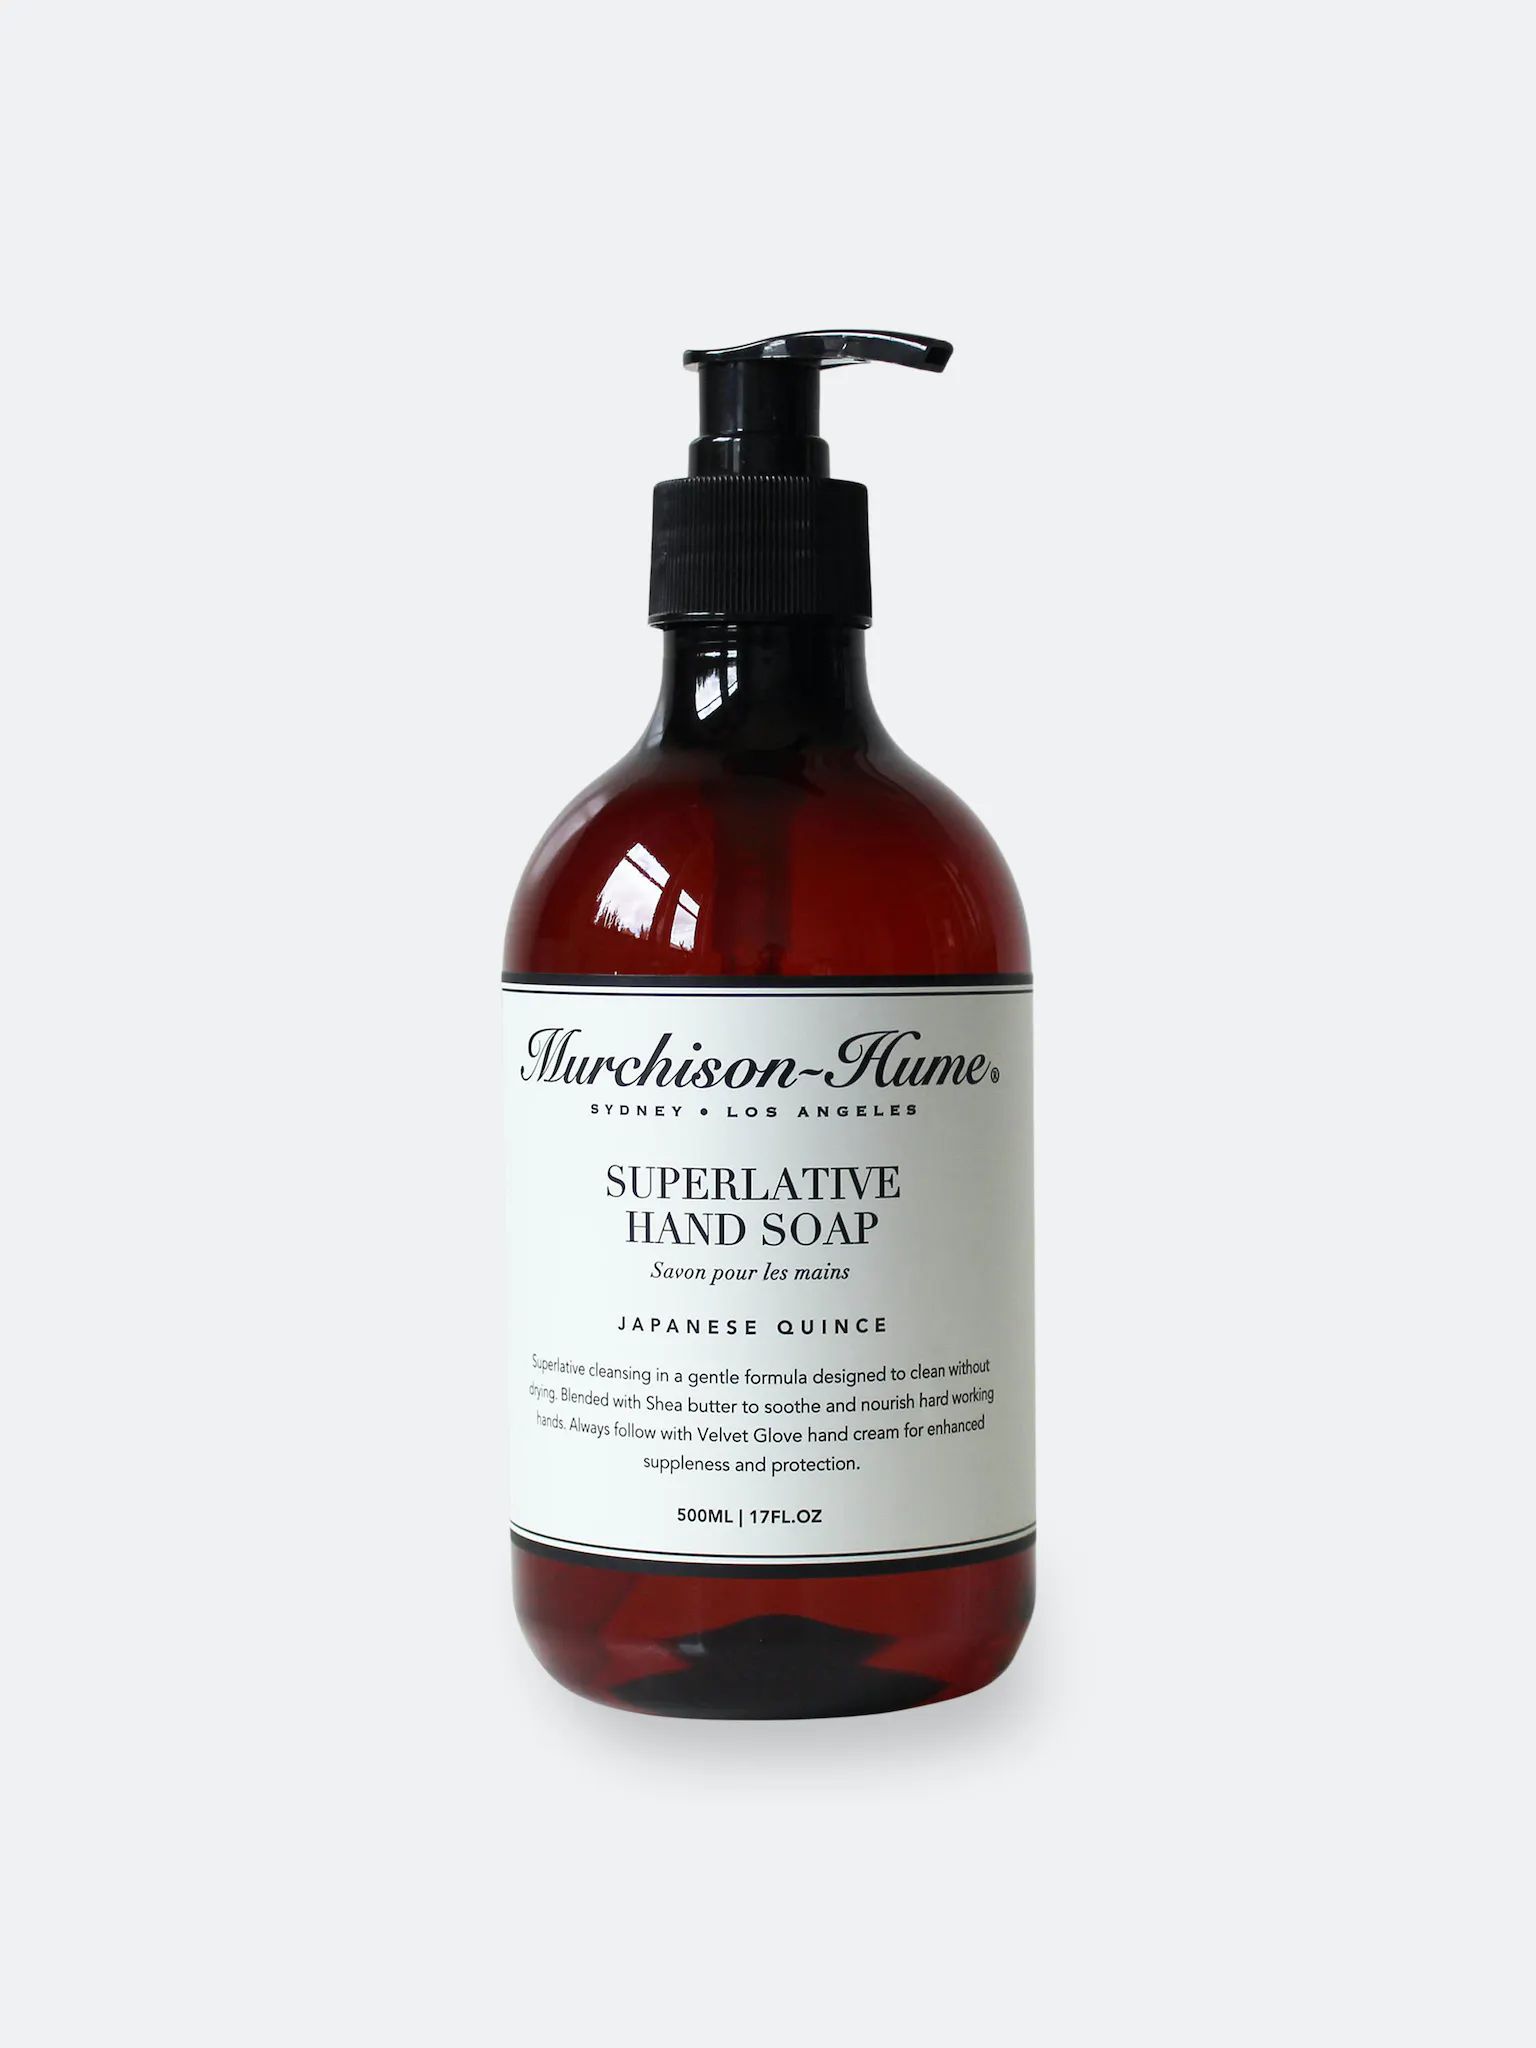 Murchison-Hume Superlative Hand Soap | Verishop